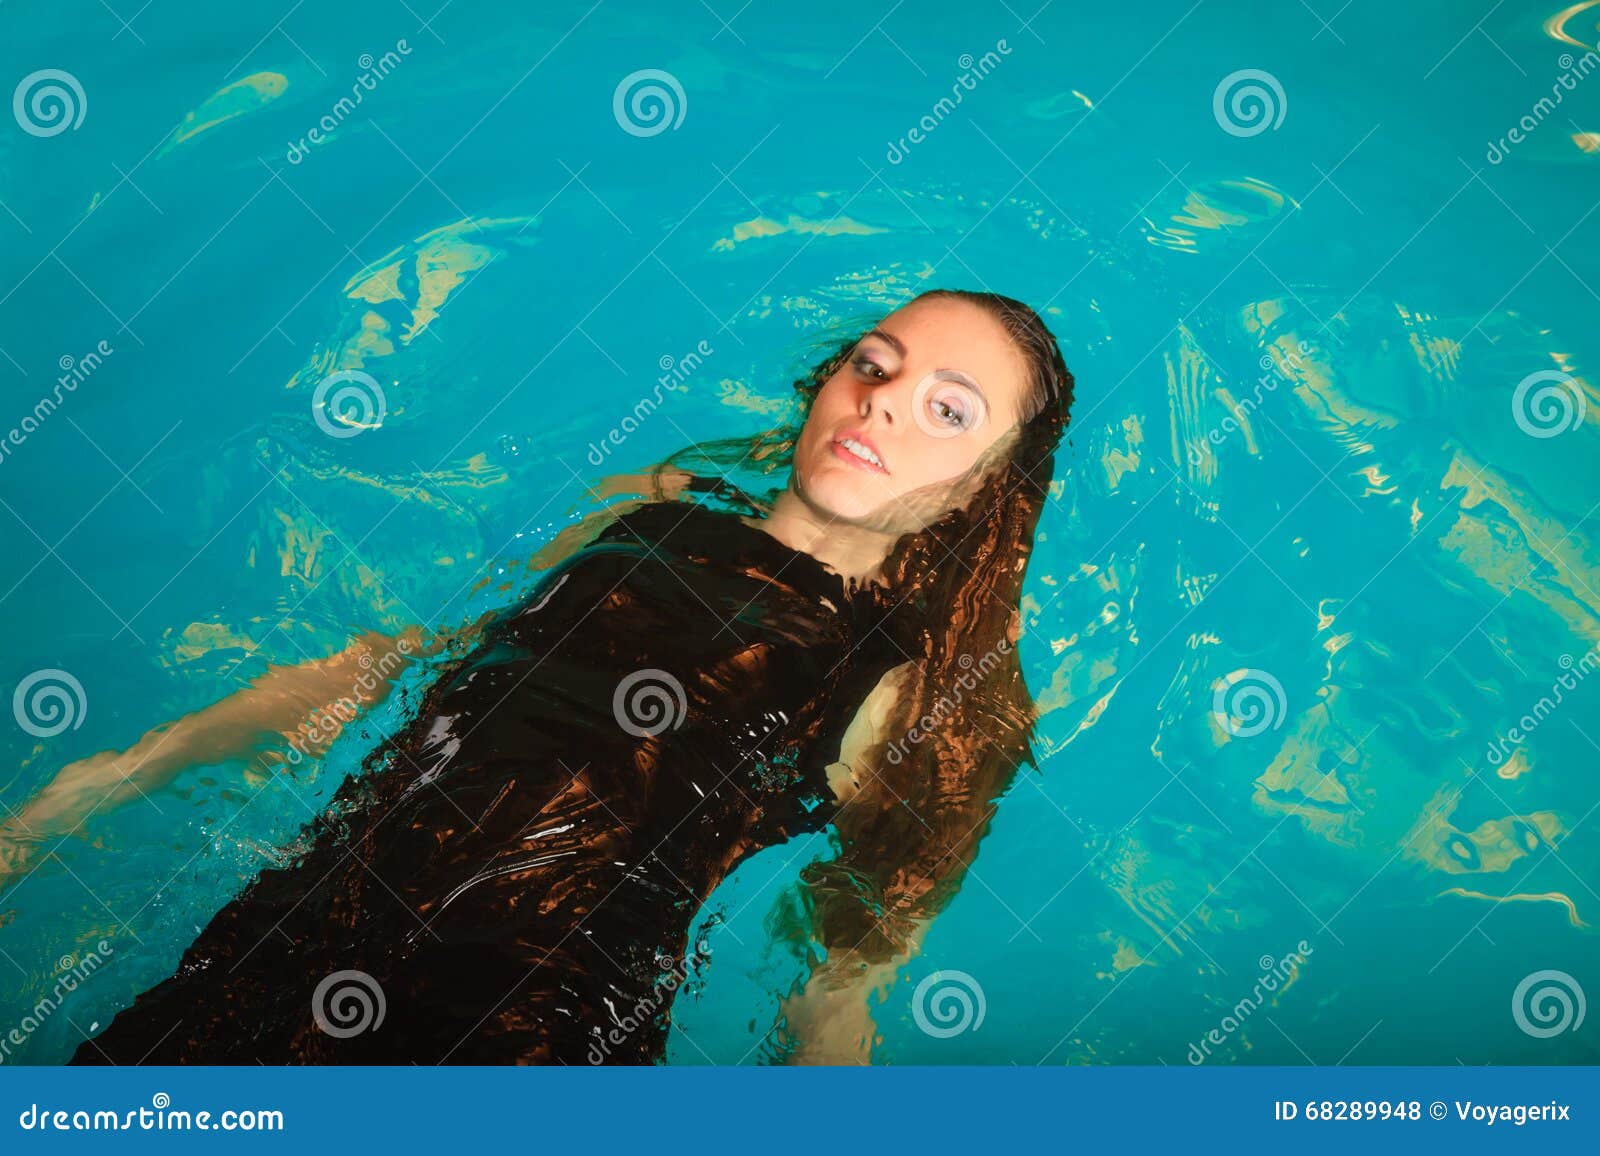 model floating in water